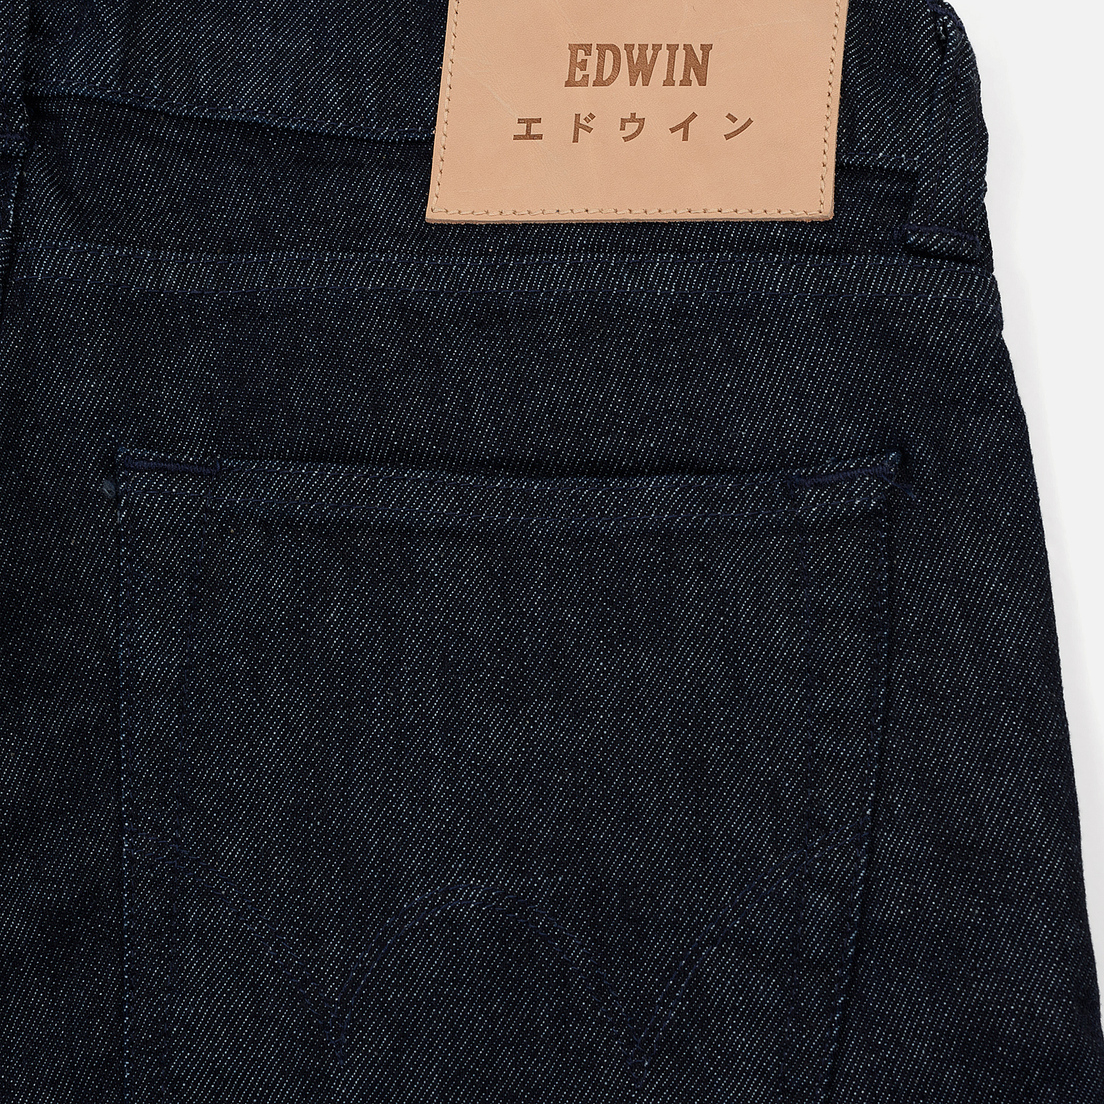 Edwin Мужские джинсы ED-85 CS Red Listed Blue Denim 12.75 Oz